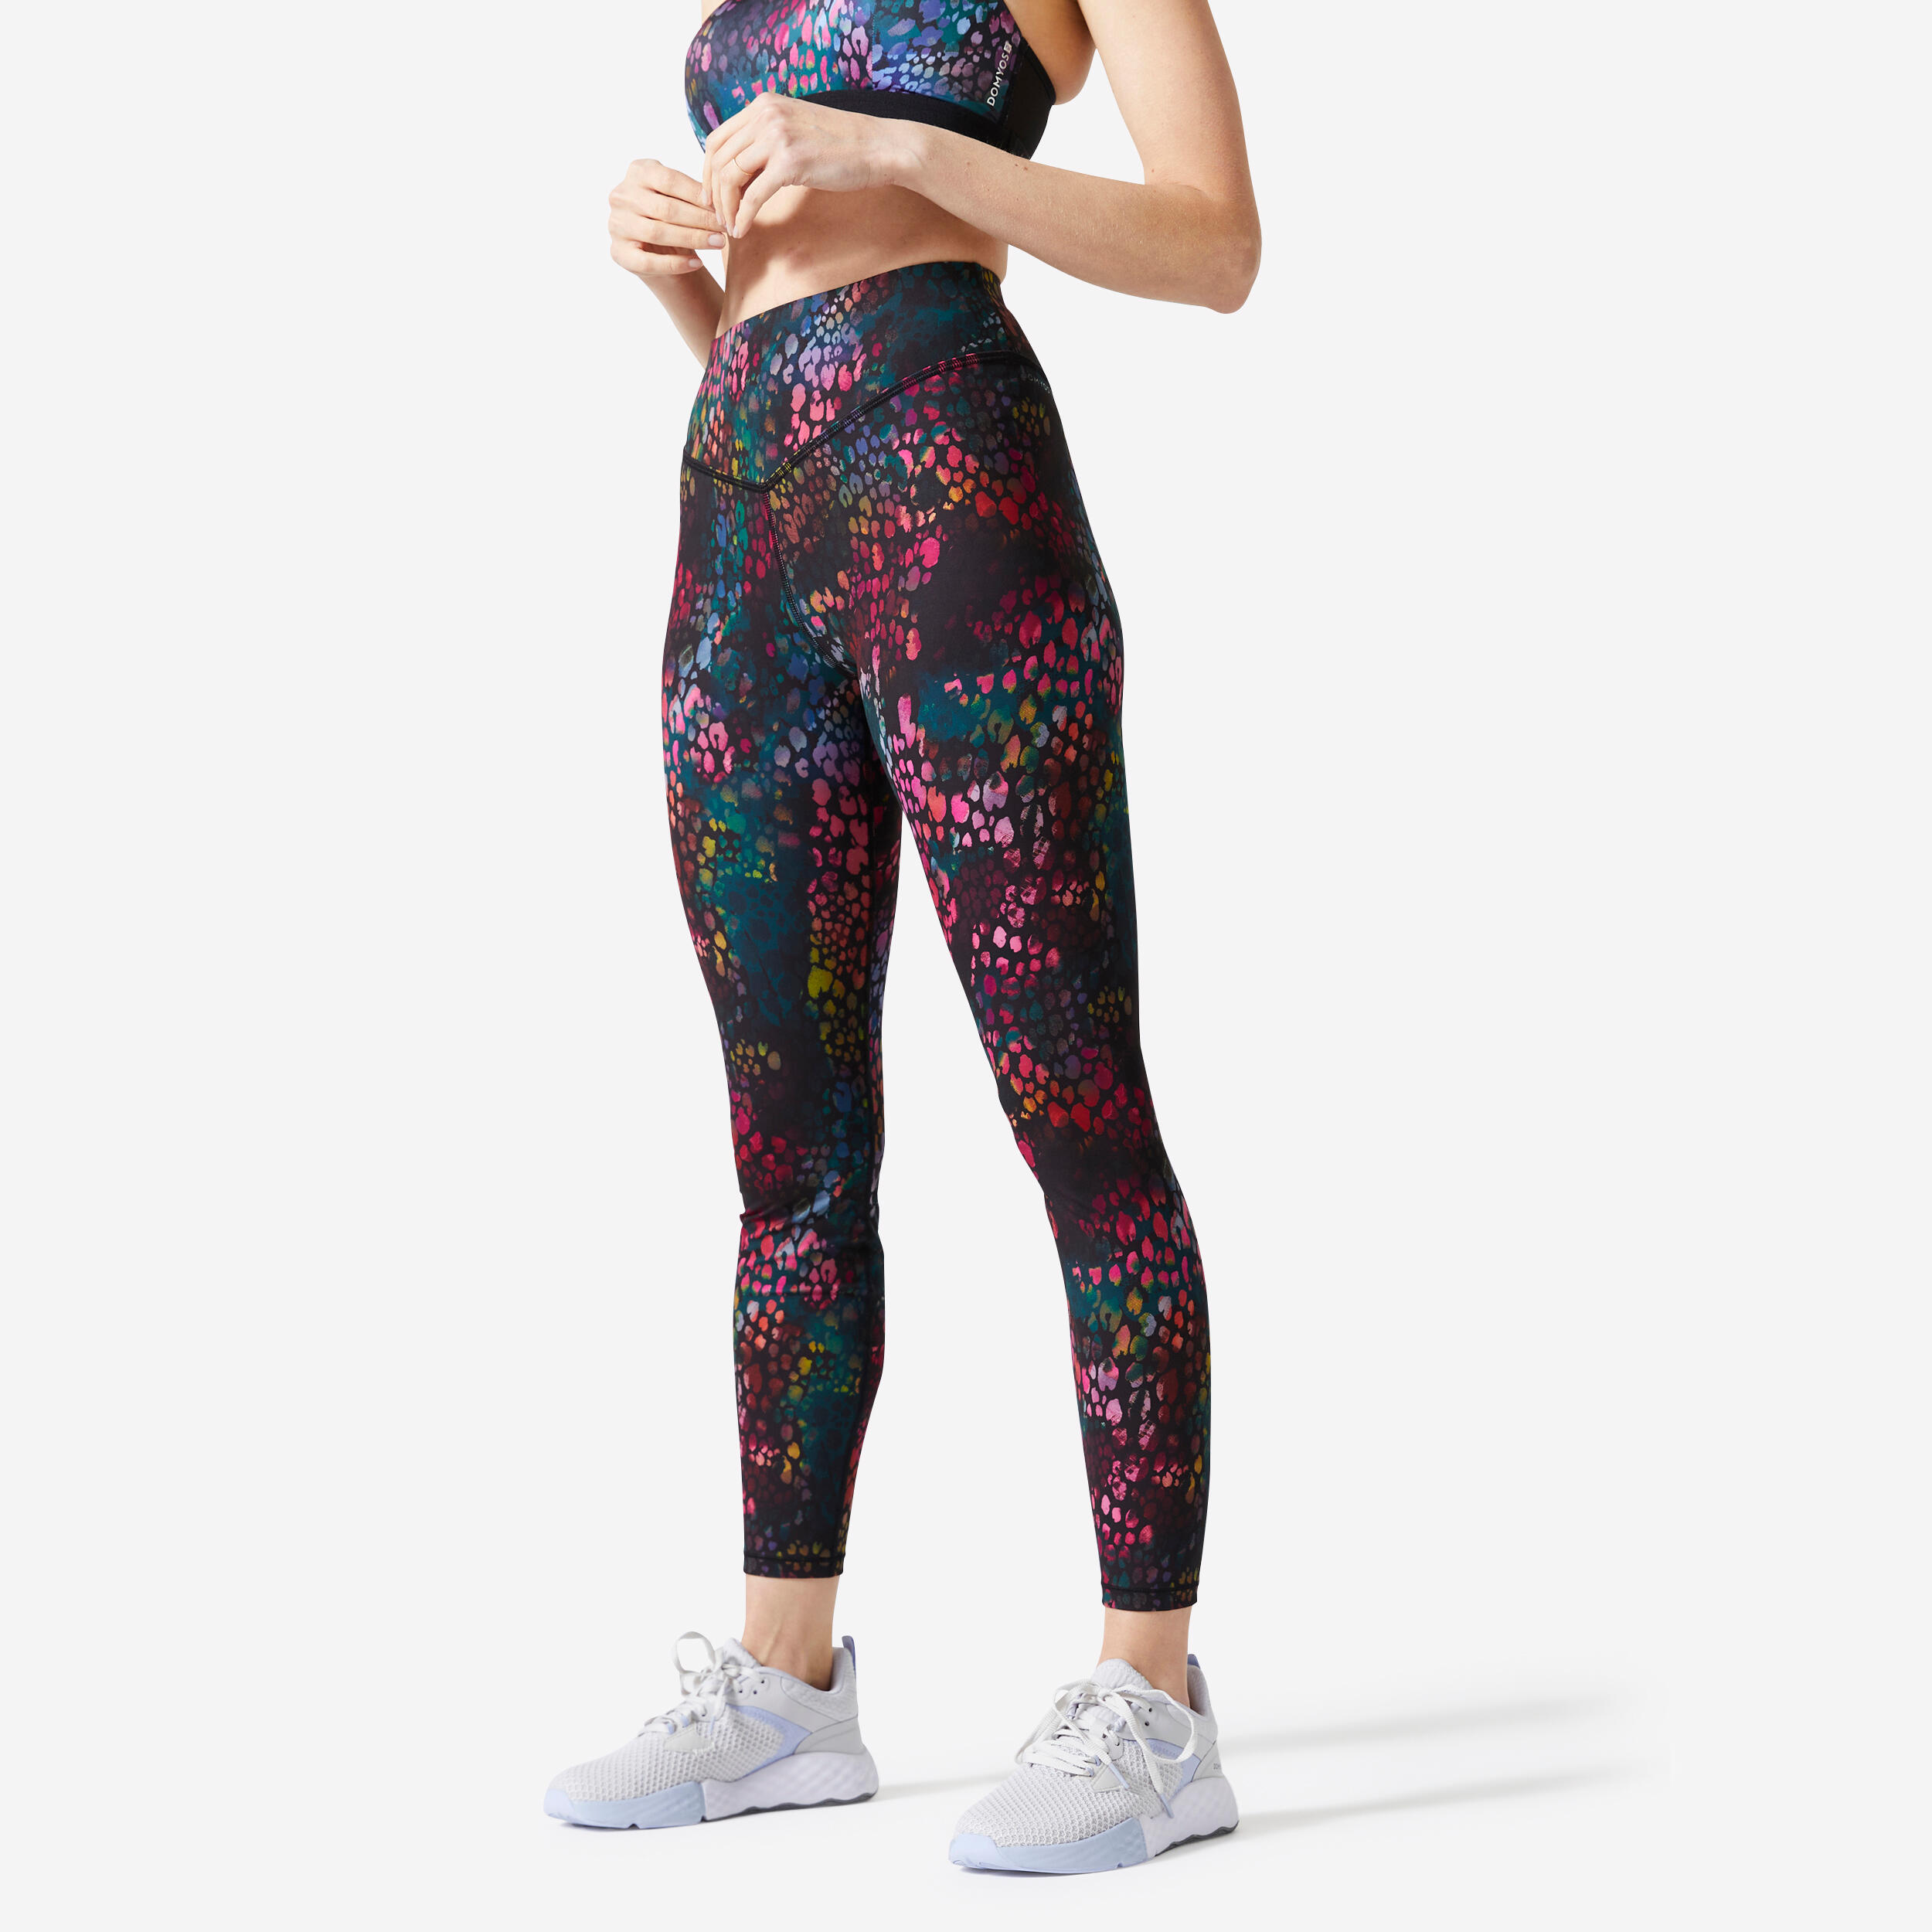 Women's High-Waisted Fitness Leggings - FTI 500 Print - Multi-colour -  Domyos - Decathlon